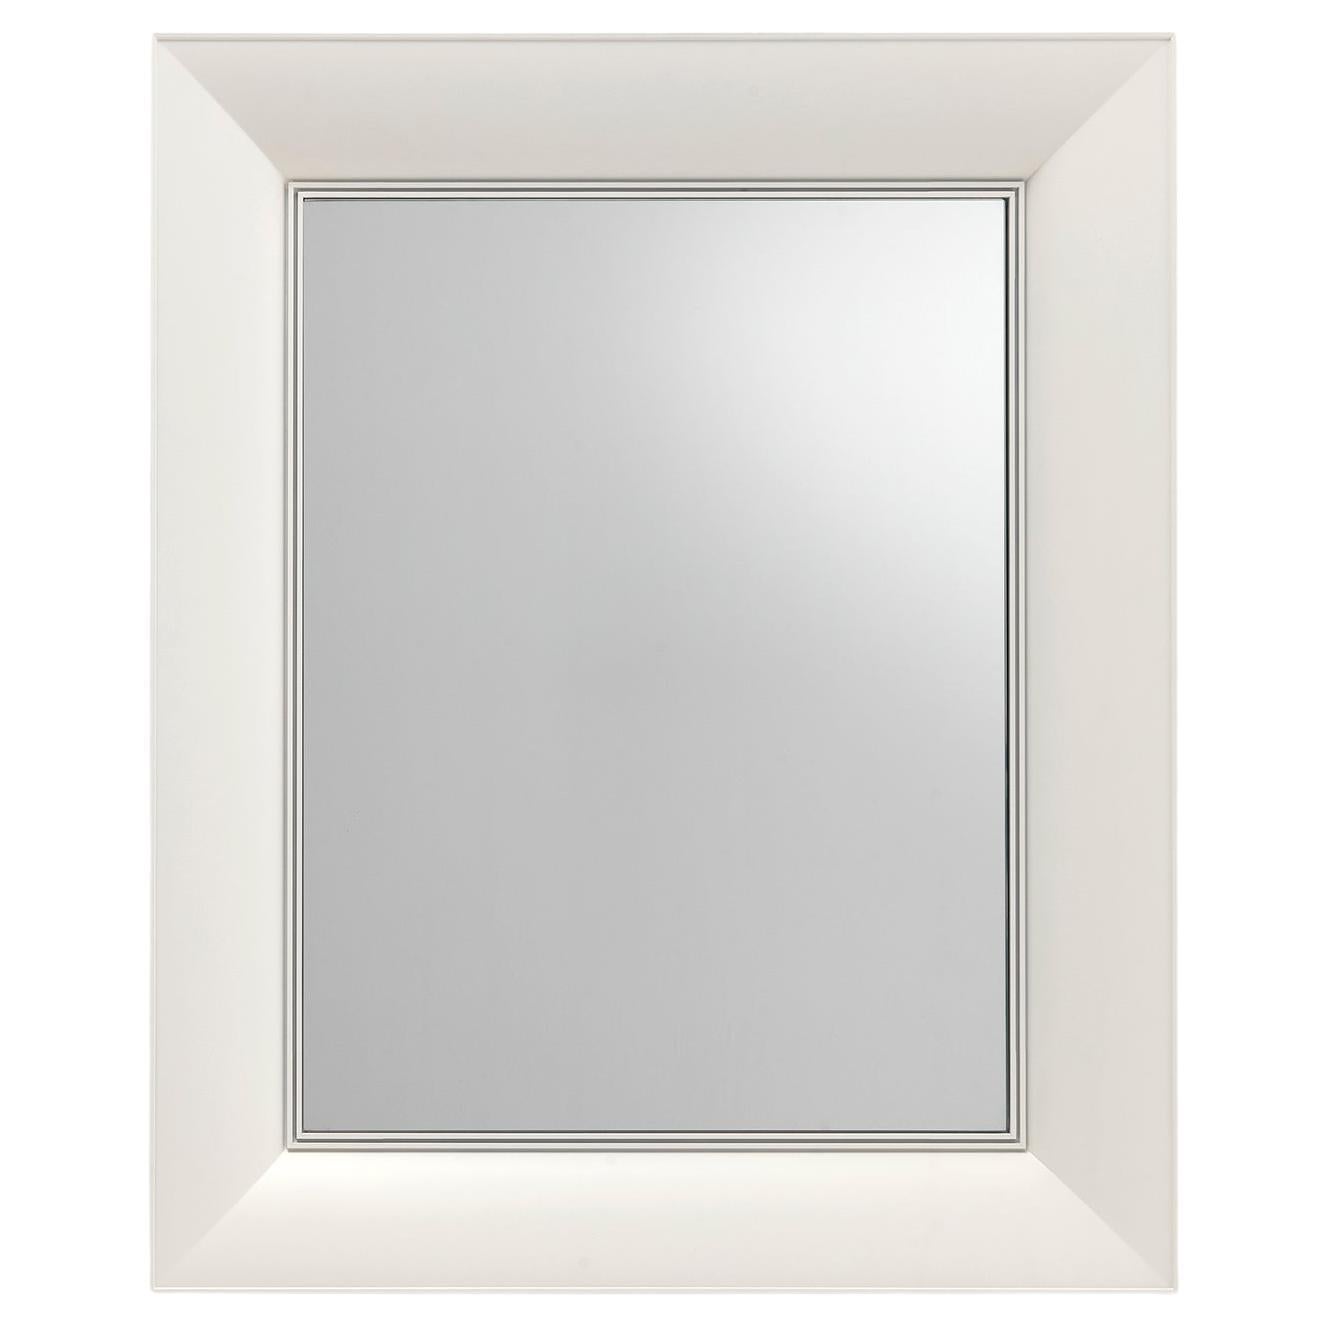 Petit miroir rectangulaire « Francois Ghost » Kartell en blanc mat de Philippe Starck